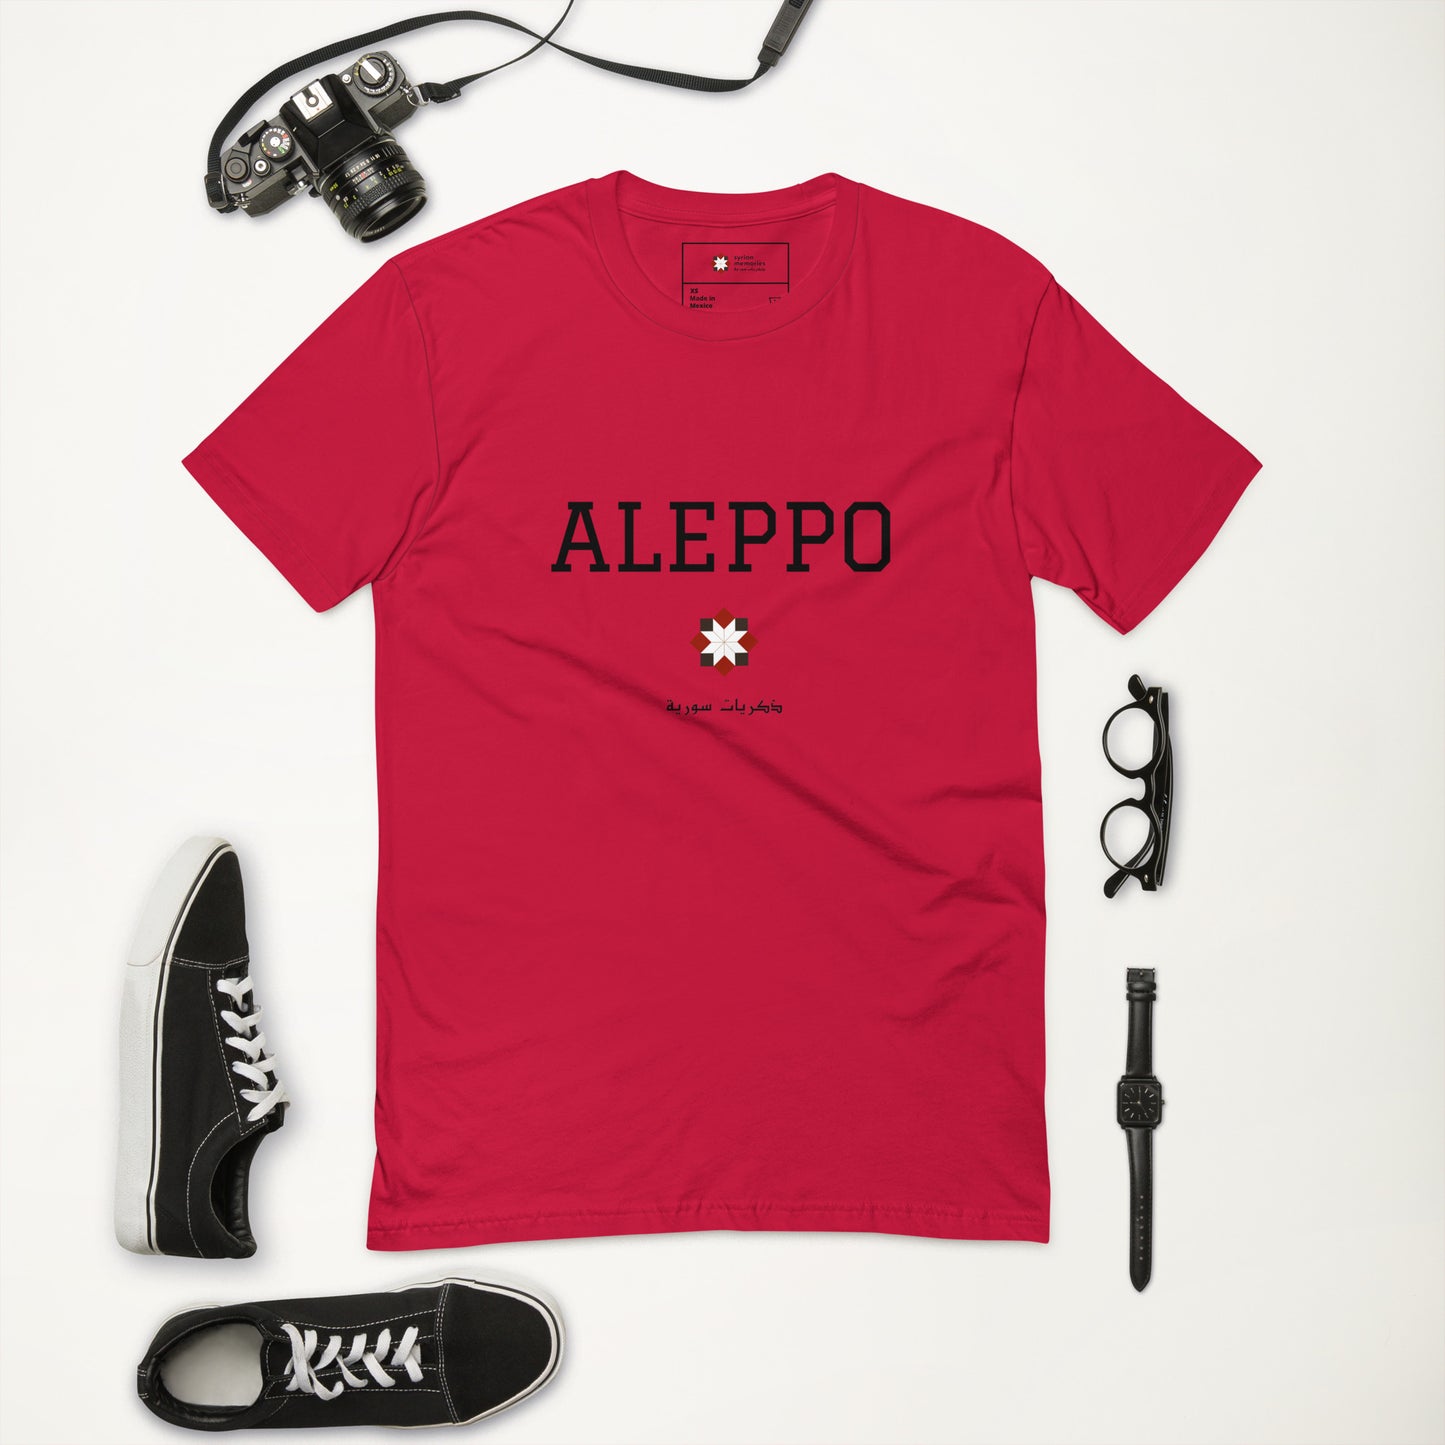 Aleppo - University Collection - Cotton T-shirt